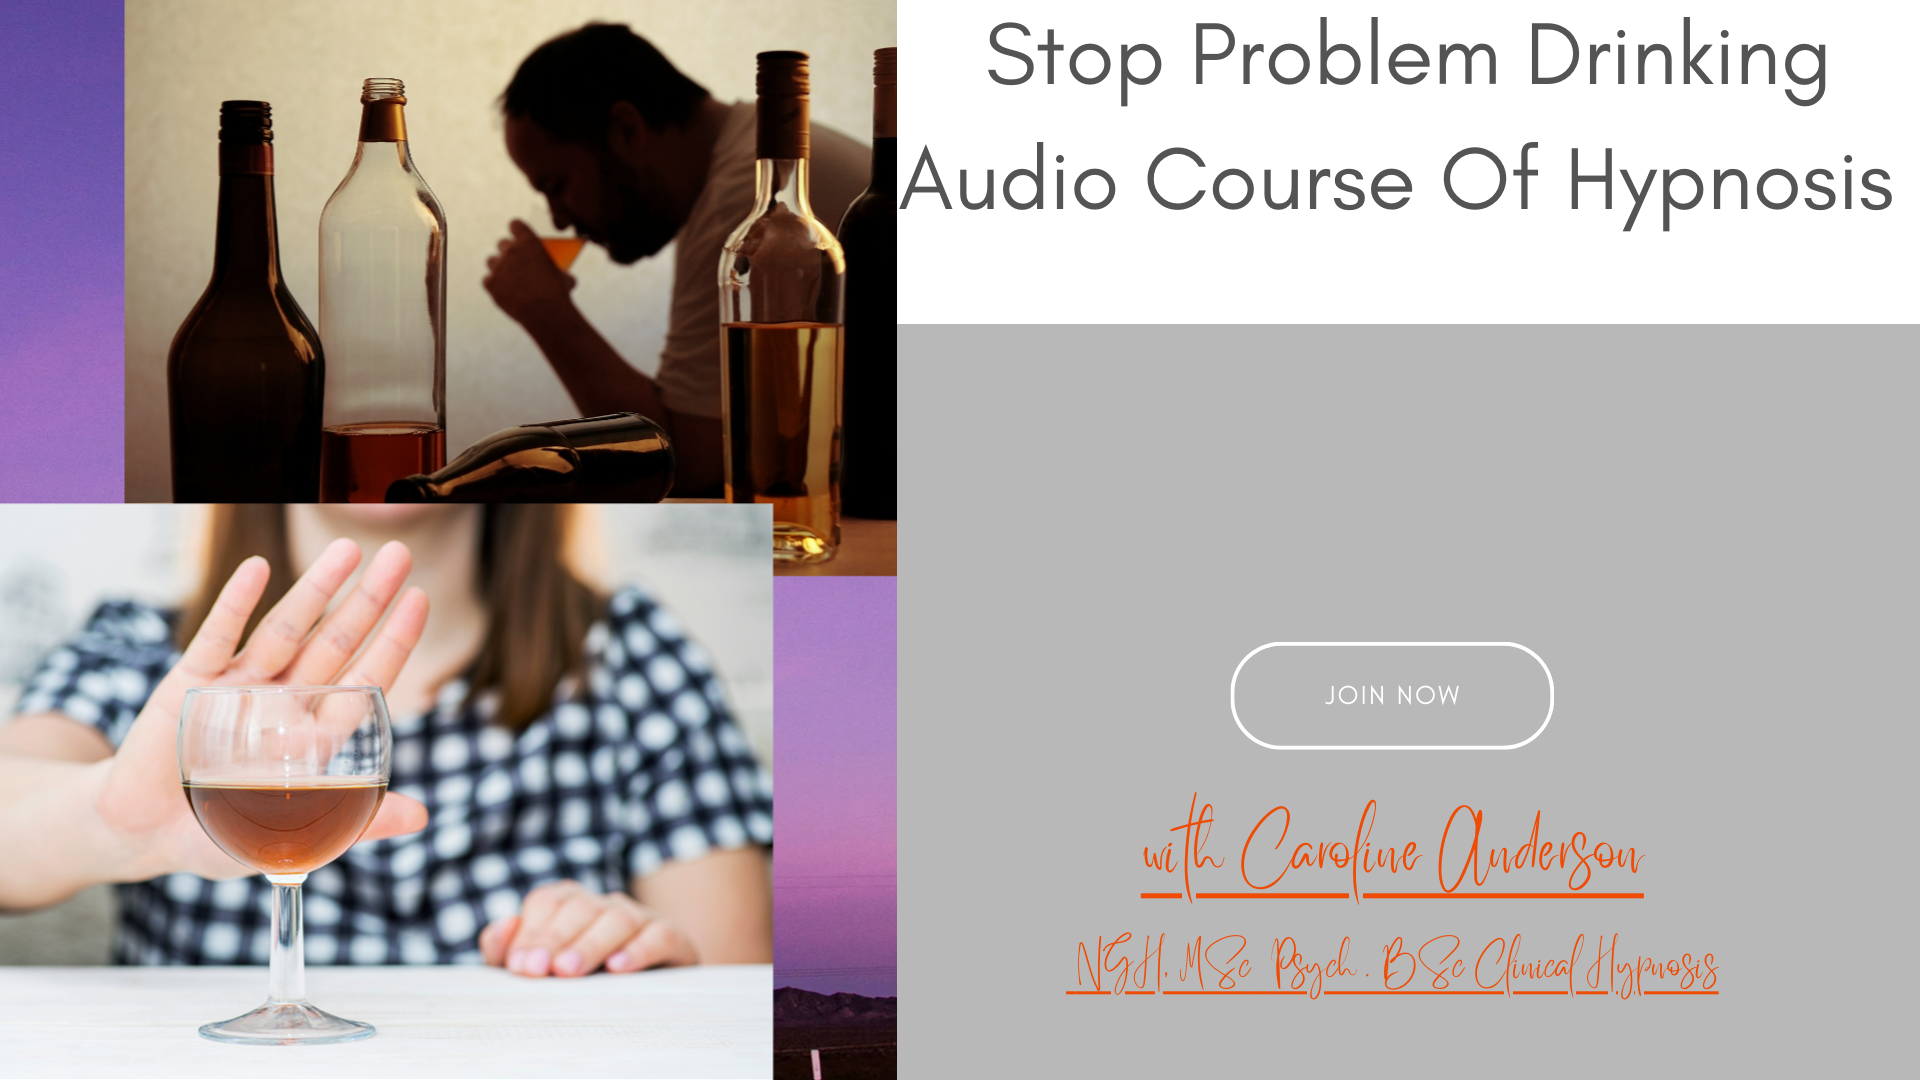 Stop Problem Drinking Hypnosis Audio Course 
KickaHabit©: With Caroline 